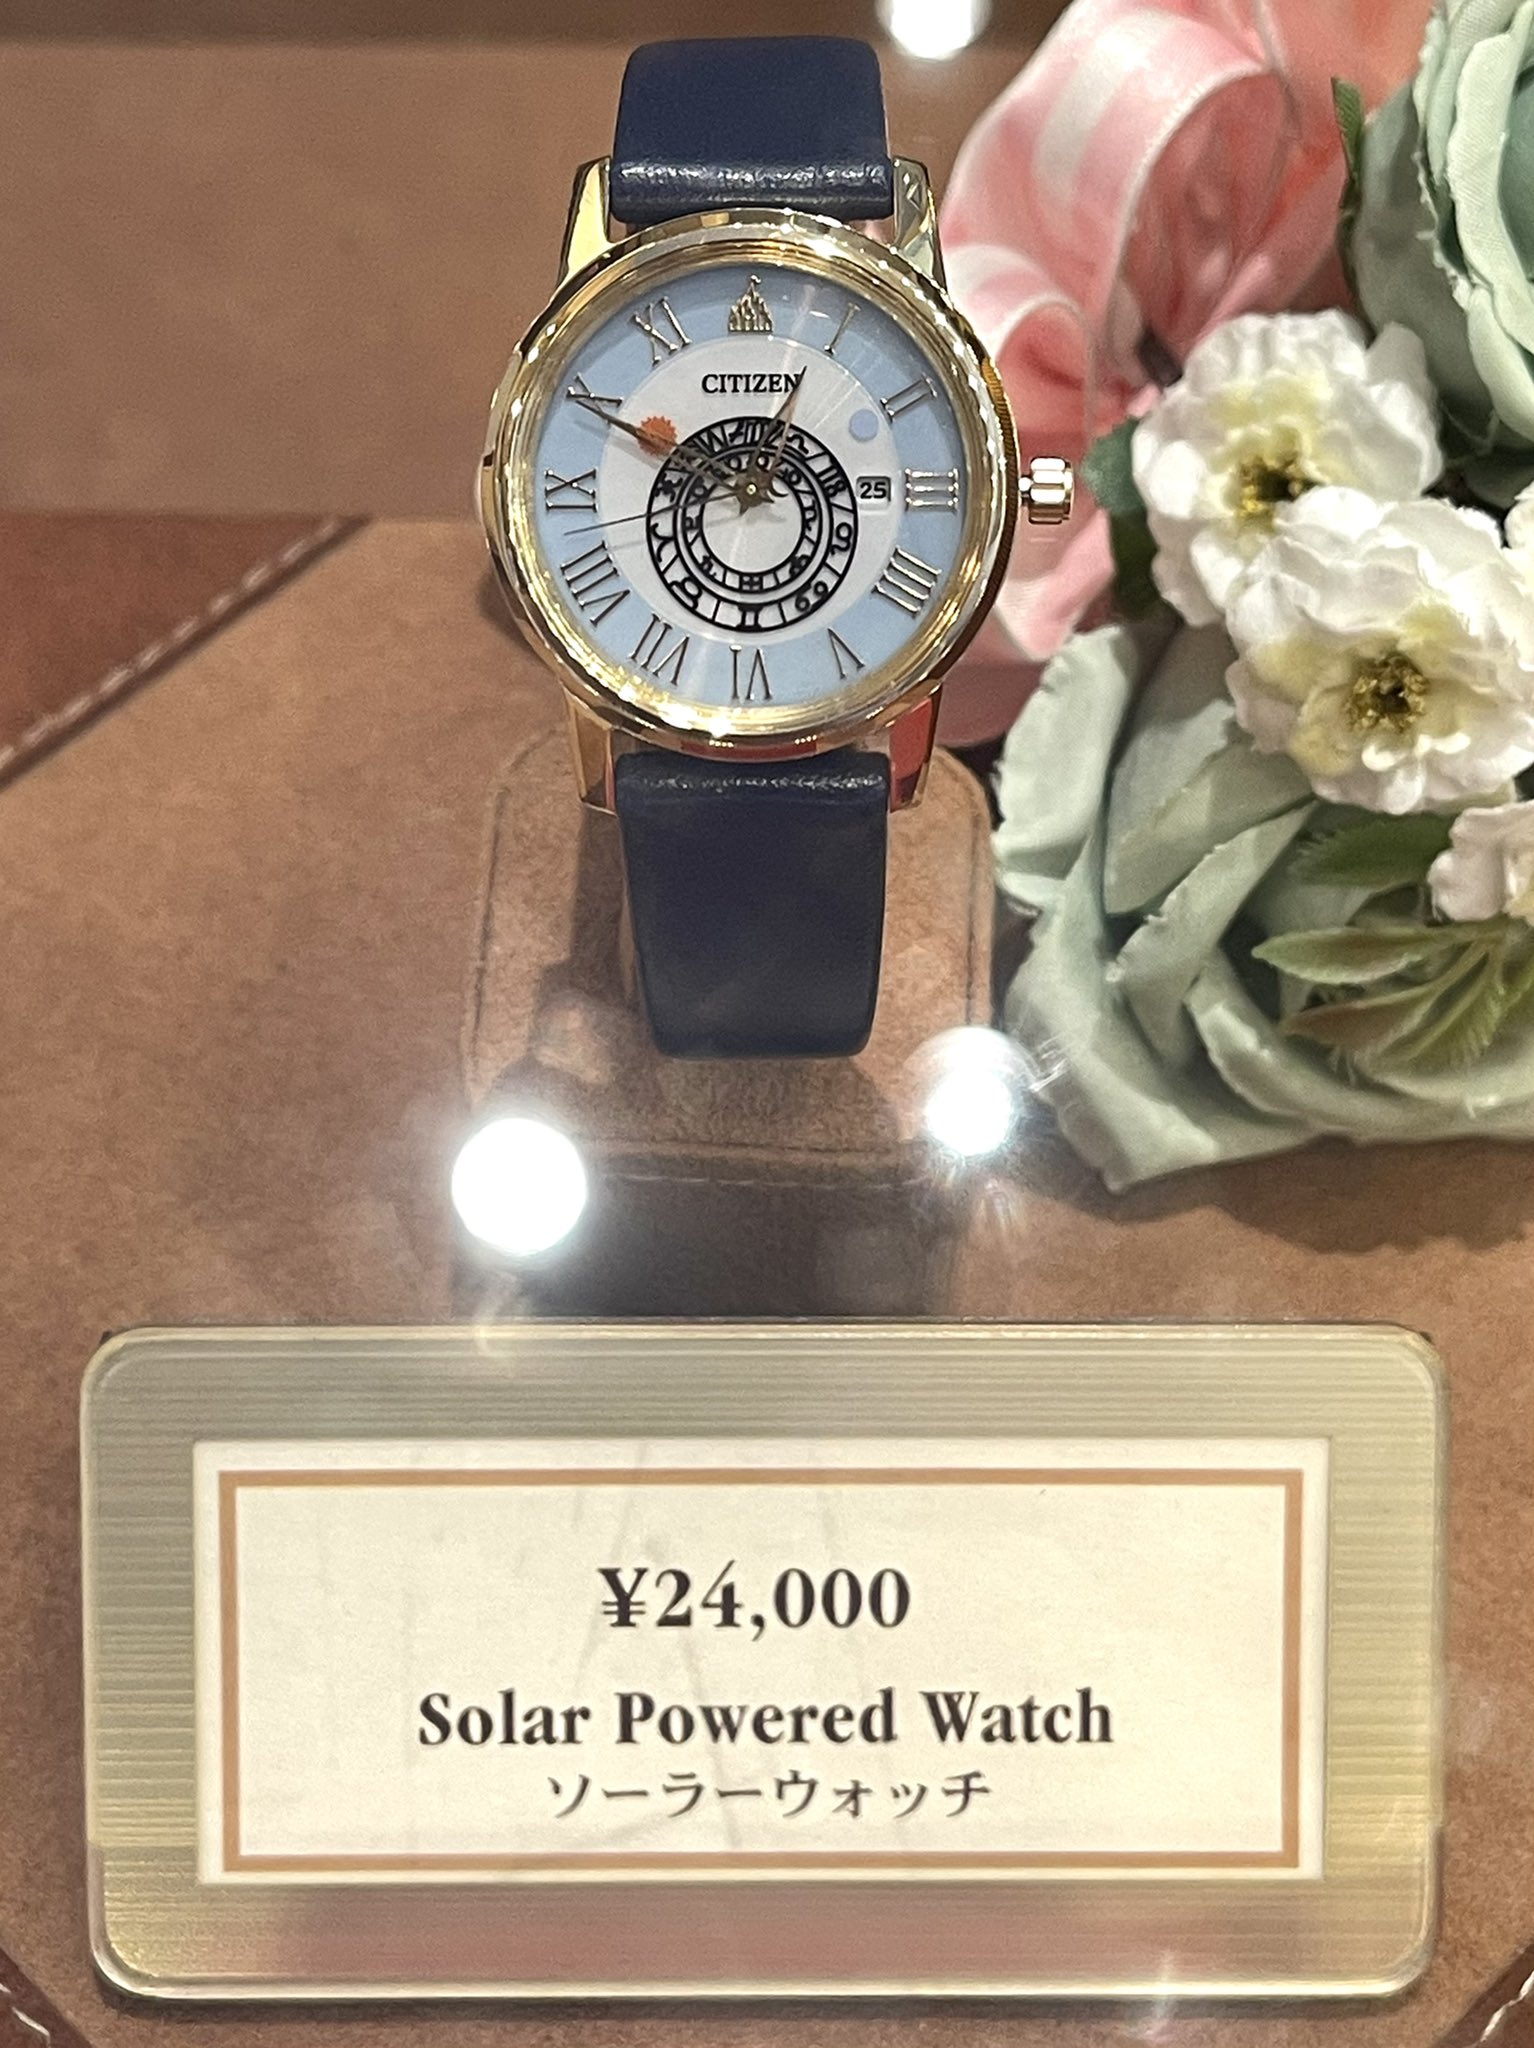 Shunsuke シンデレラ城の時計デザインの腕時計が新発売されました 円です Tdr Now Tdr Md